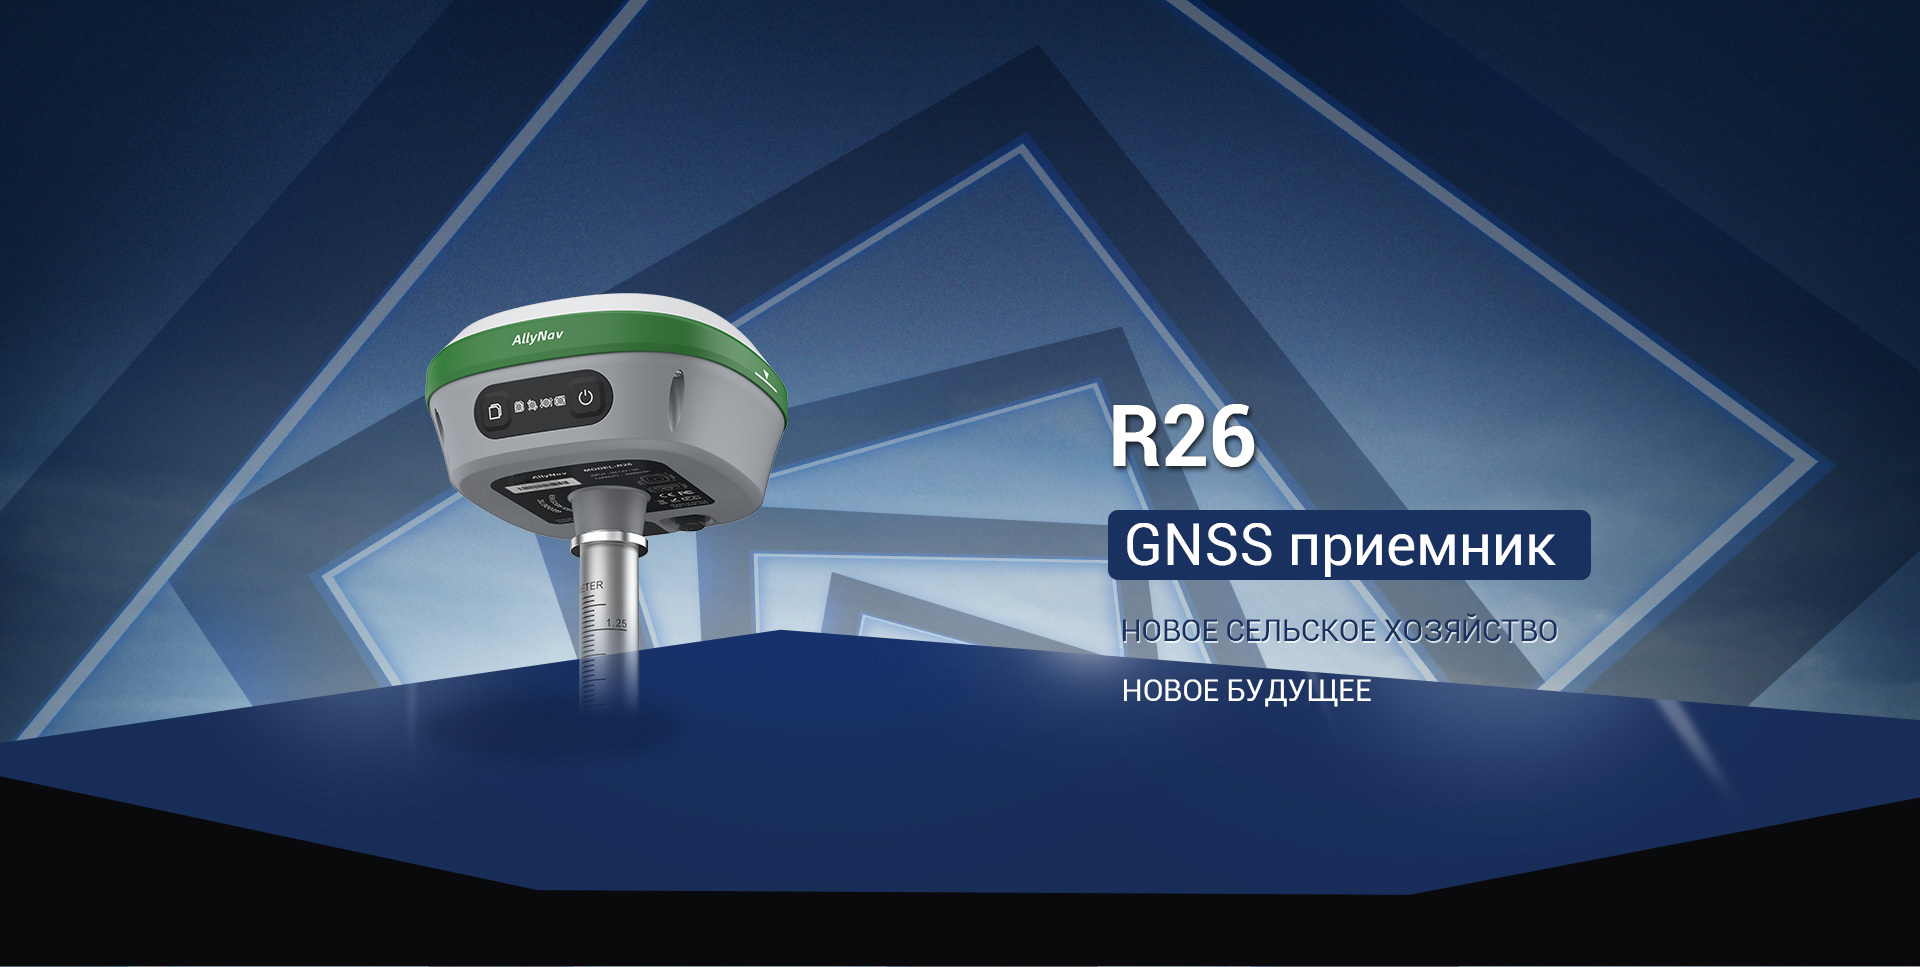 GNSS приёмник R26